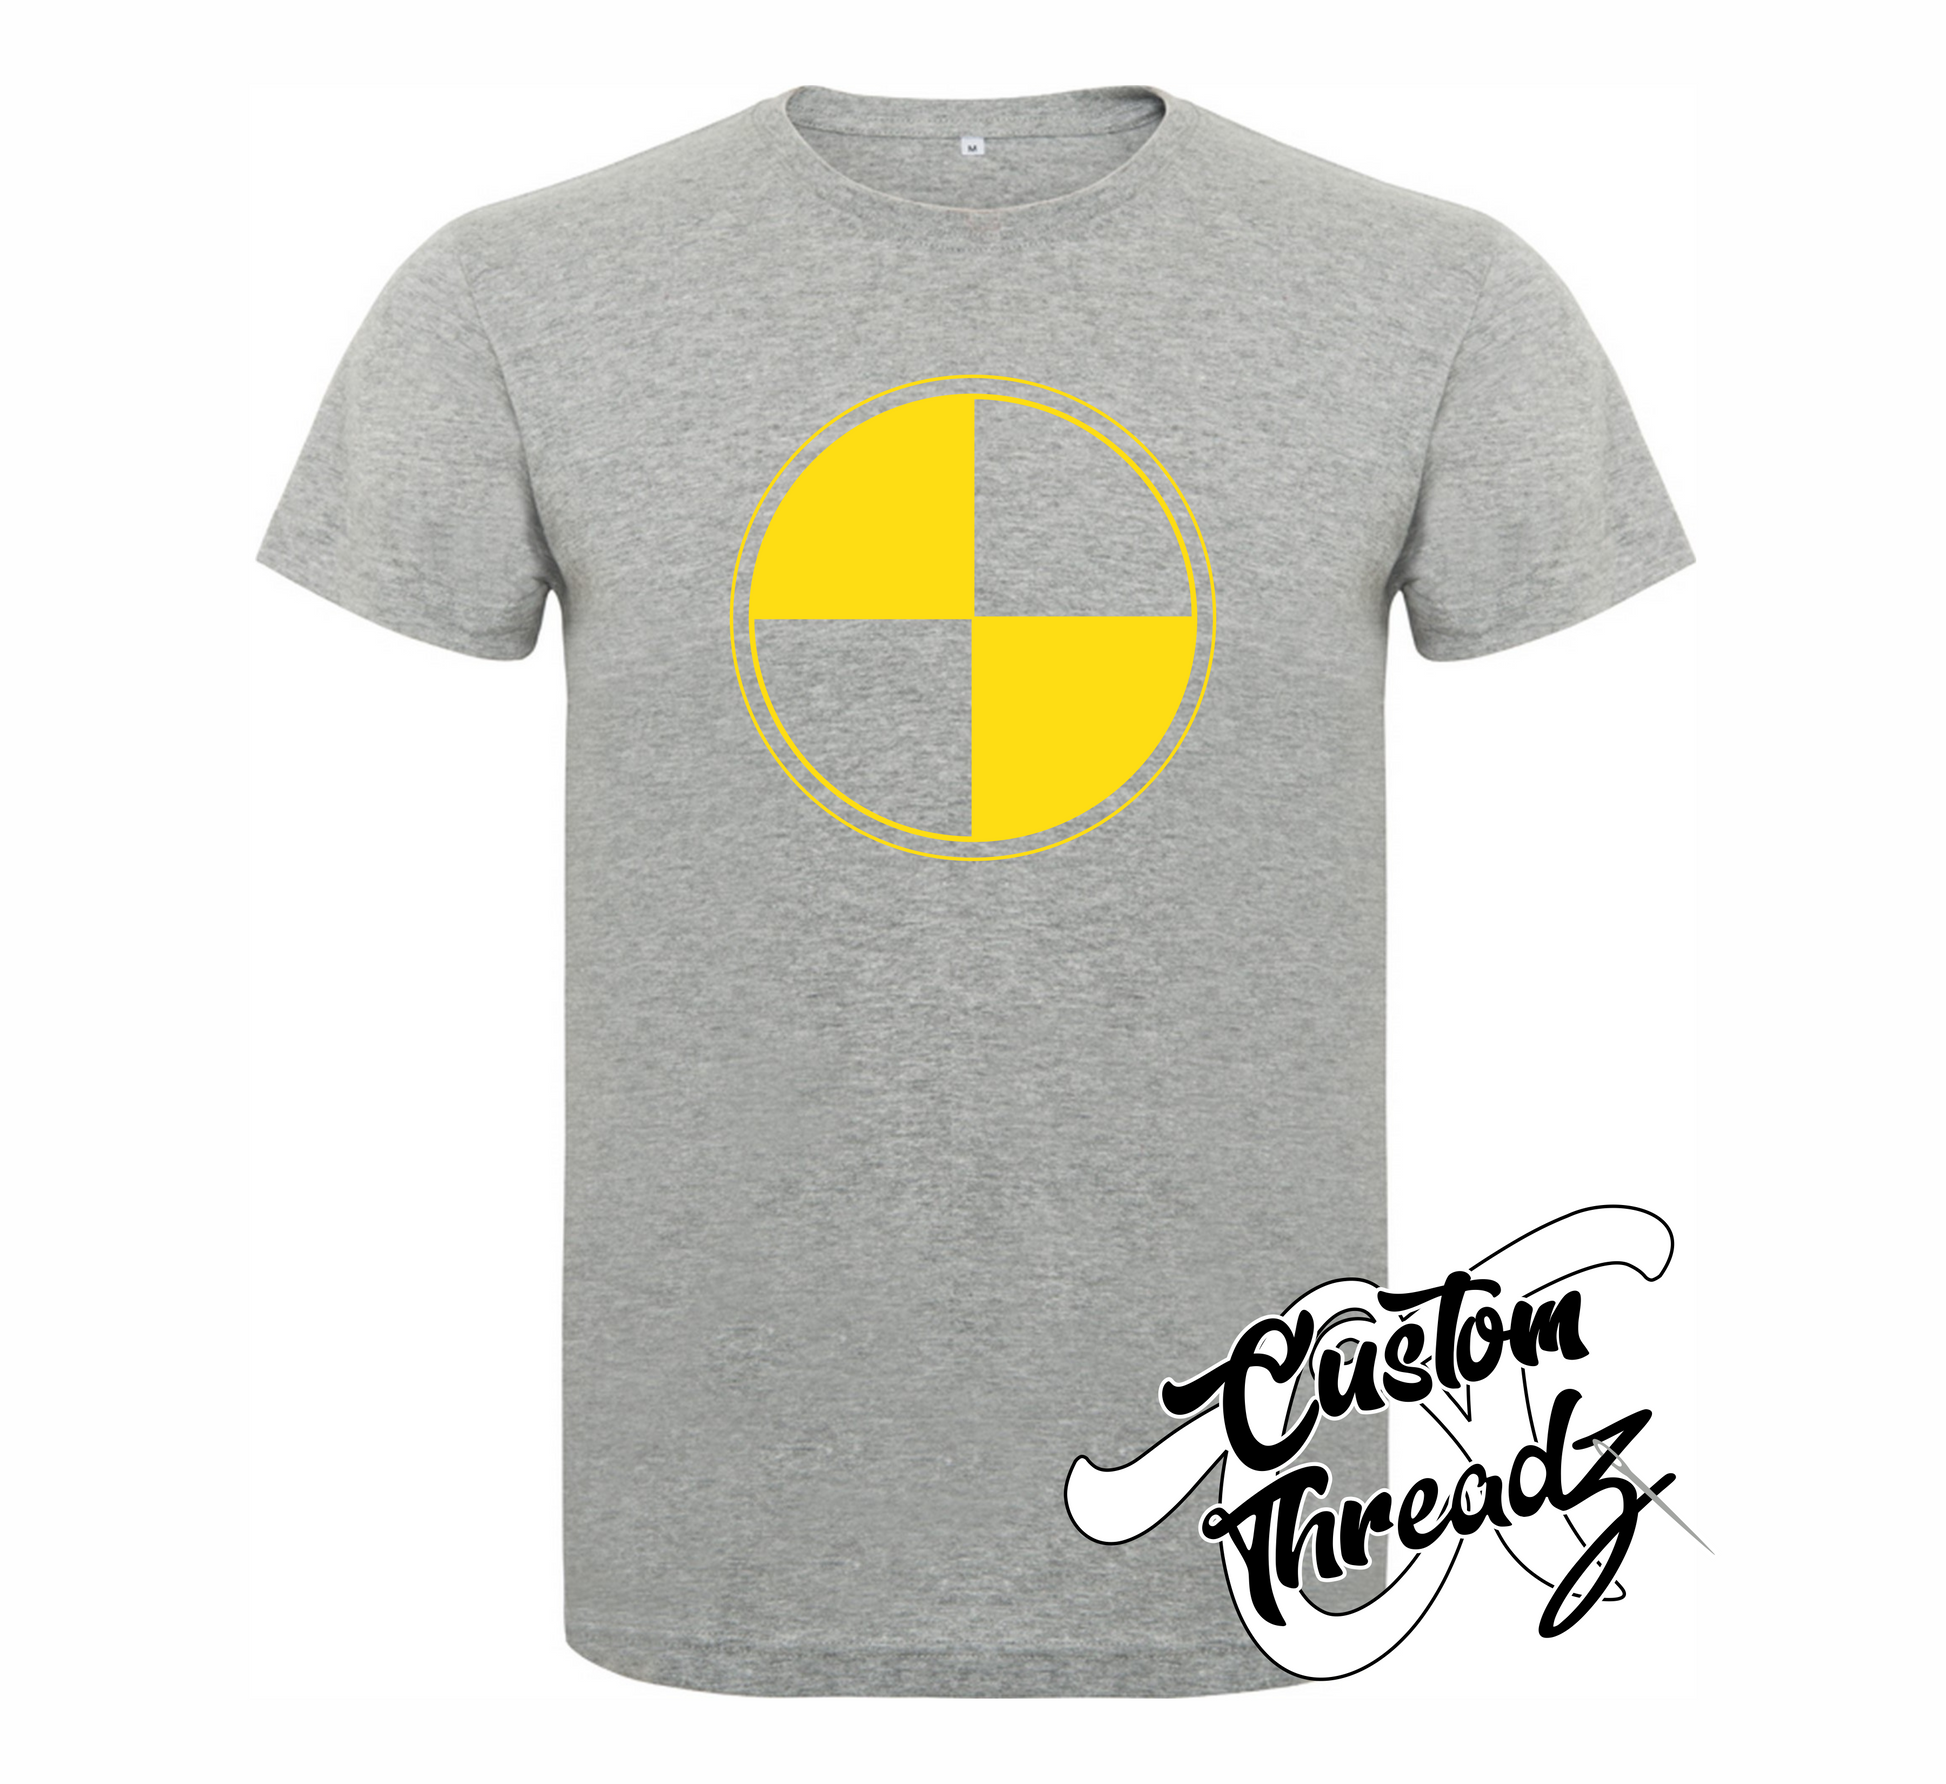 athletic heather grey tee with yellow quarantine symbol DTG printed design